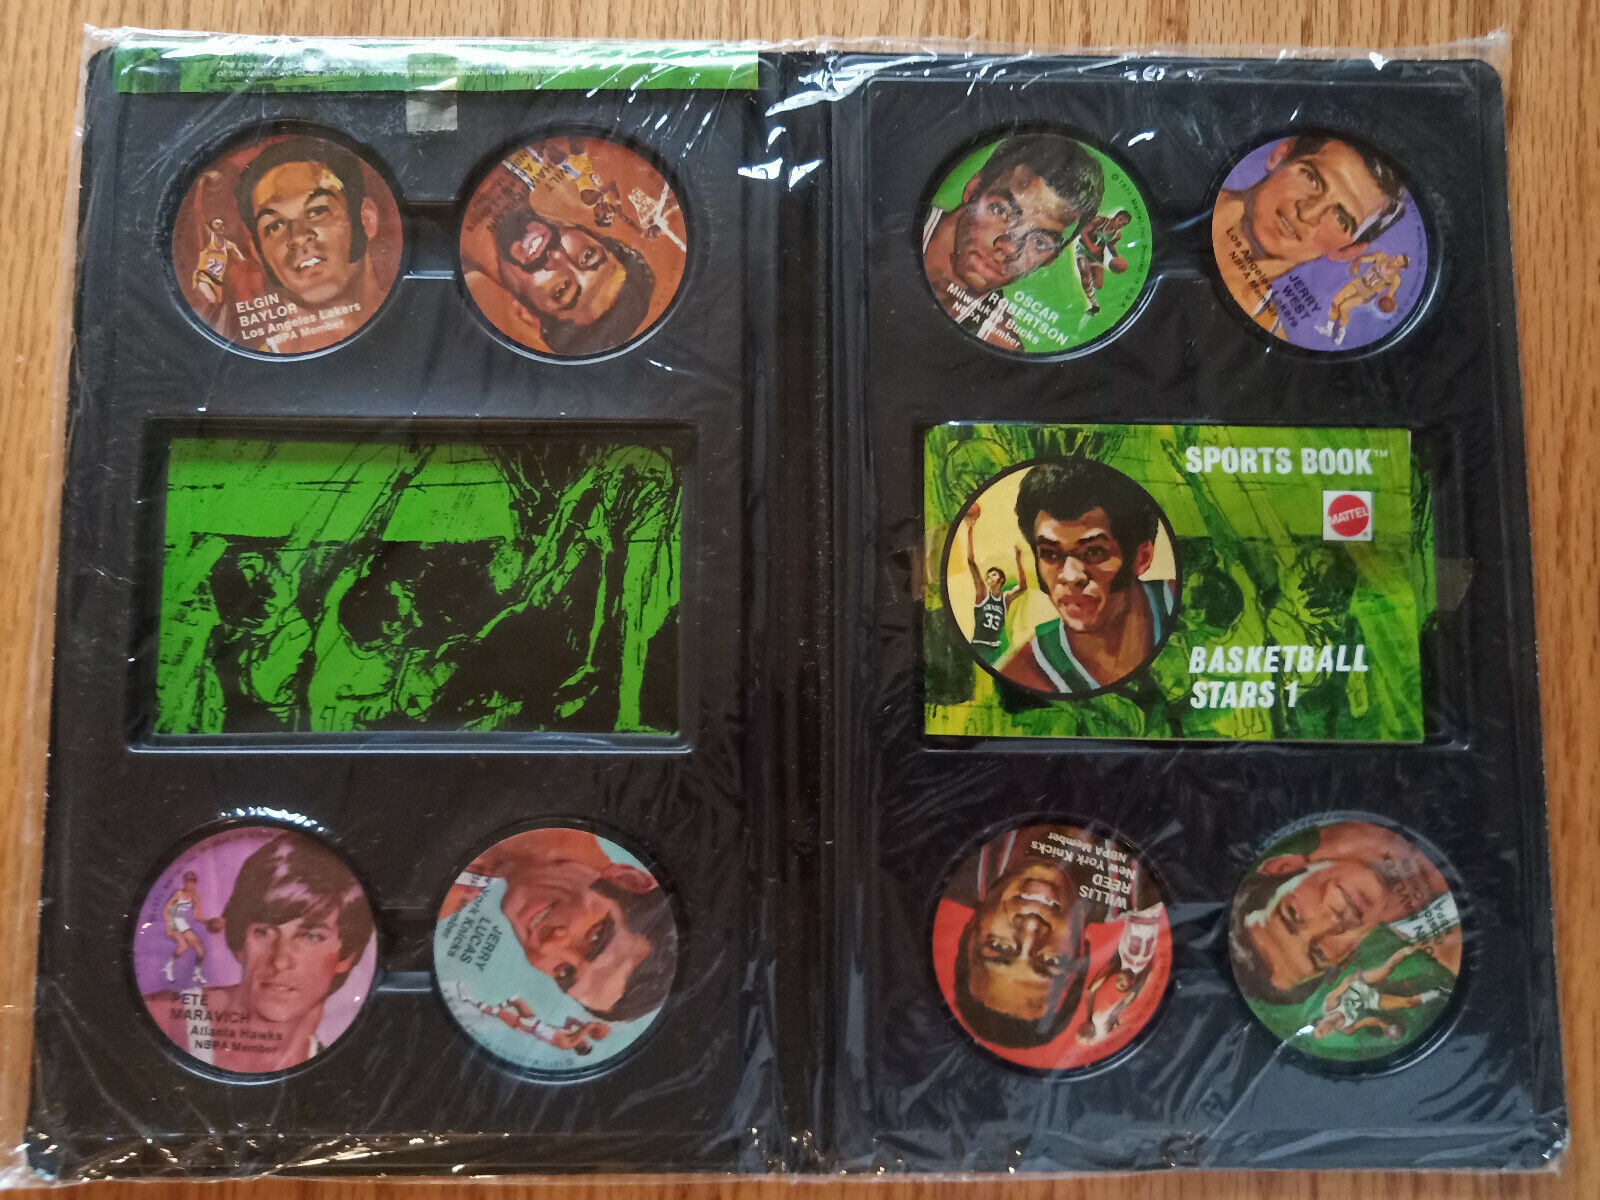 1971 Mattel Instant Replay Basketball Stars 1 Unopened Complete Set in Album  